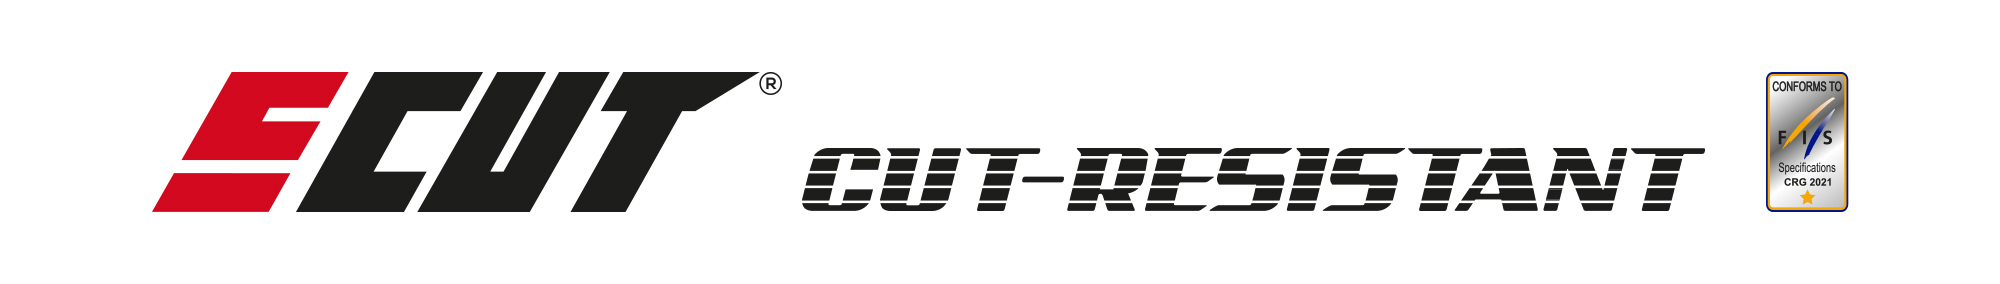 Logo Ecut cut-resistant